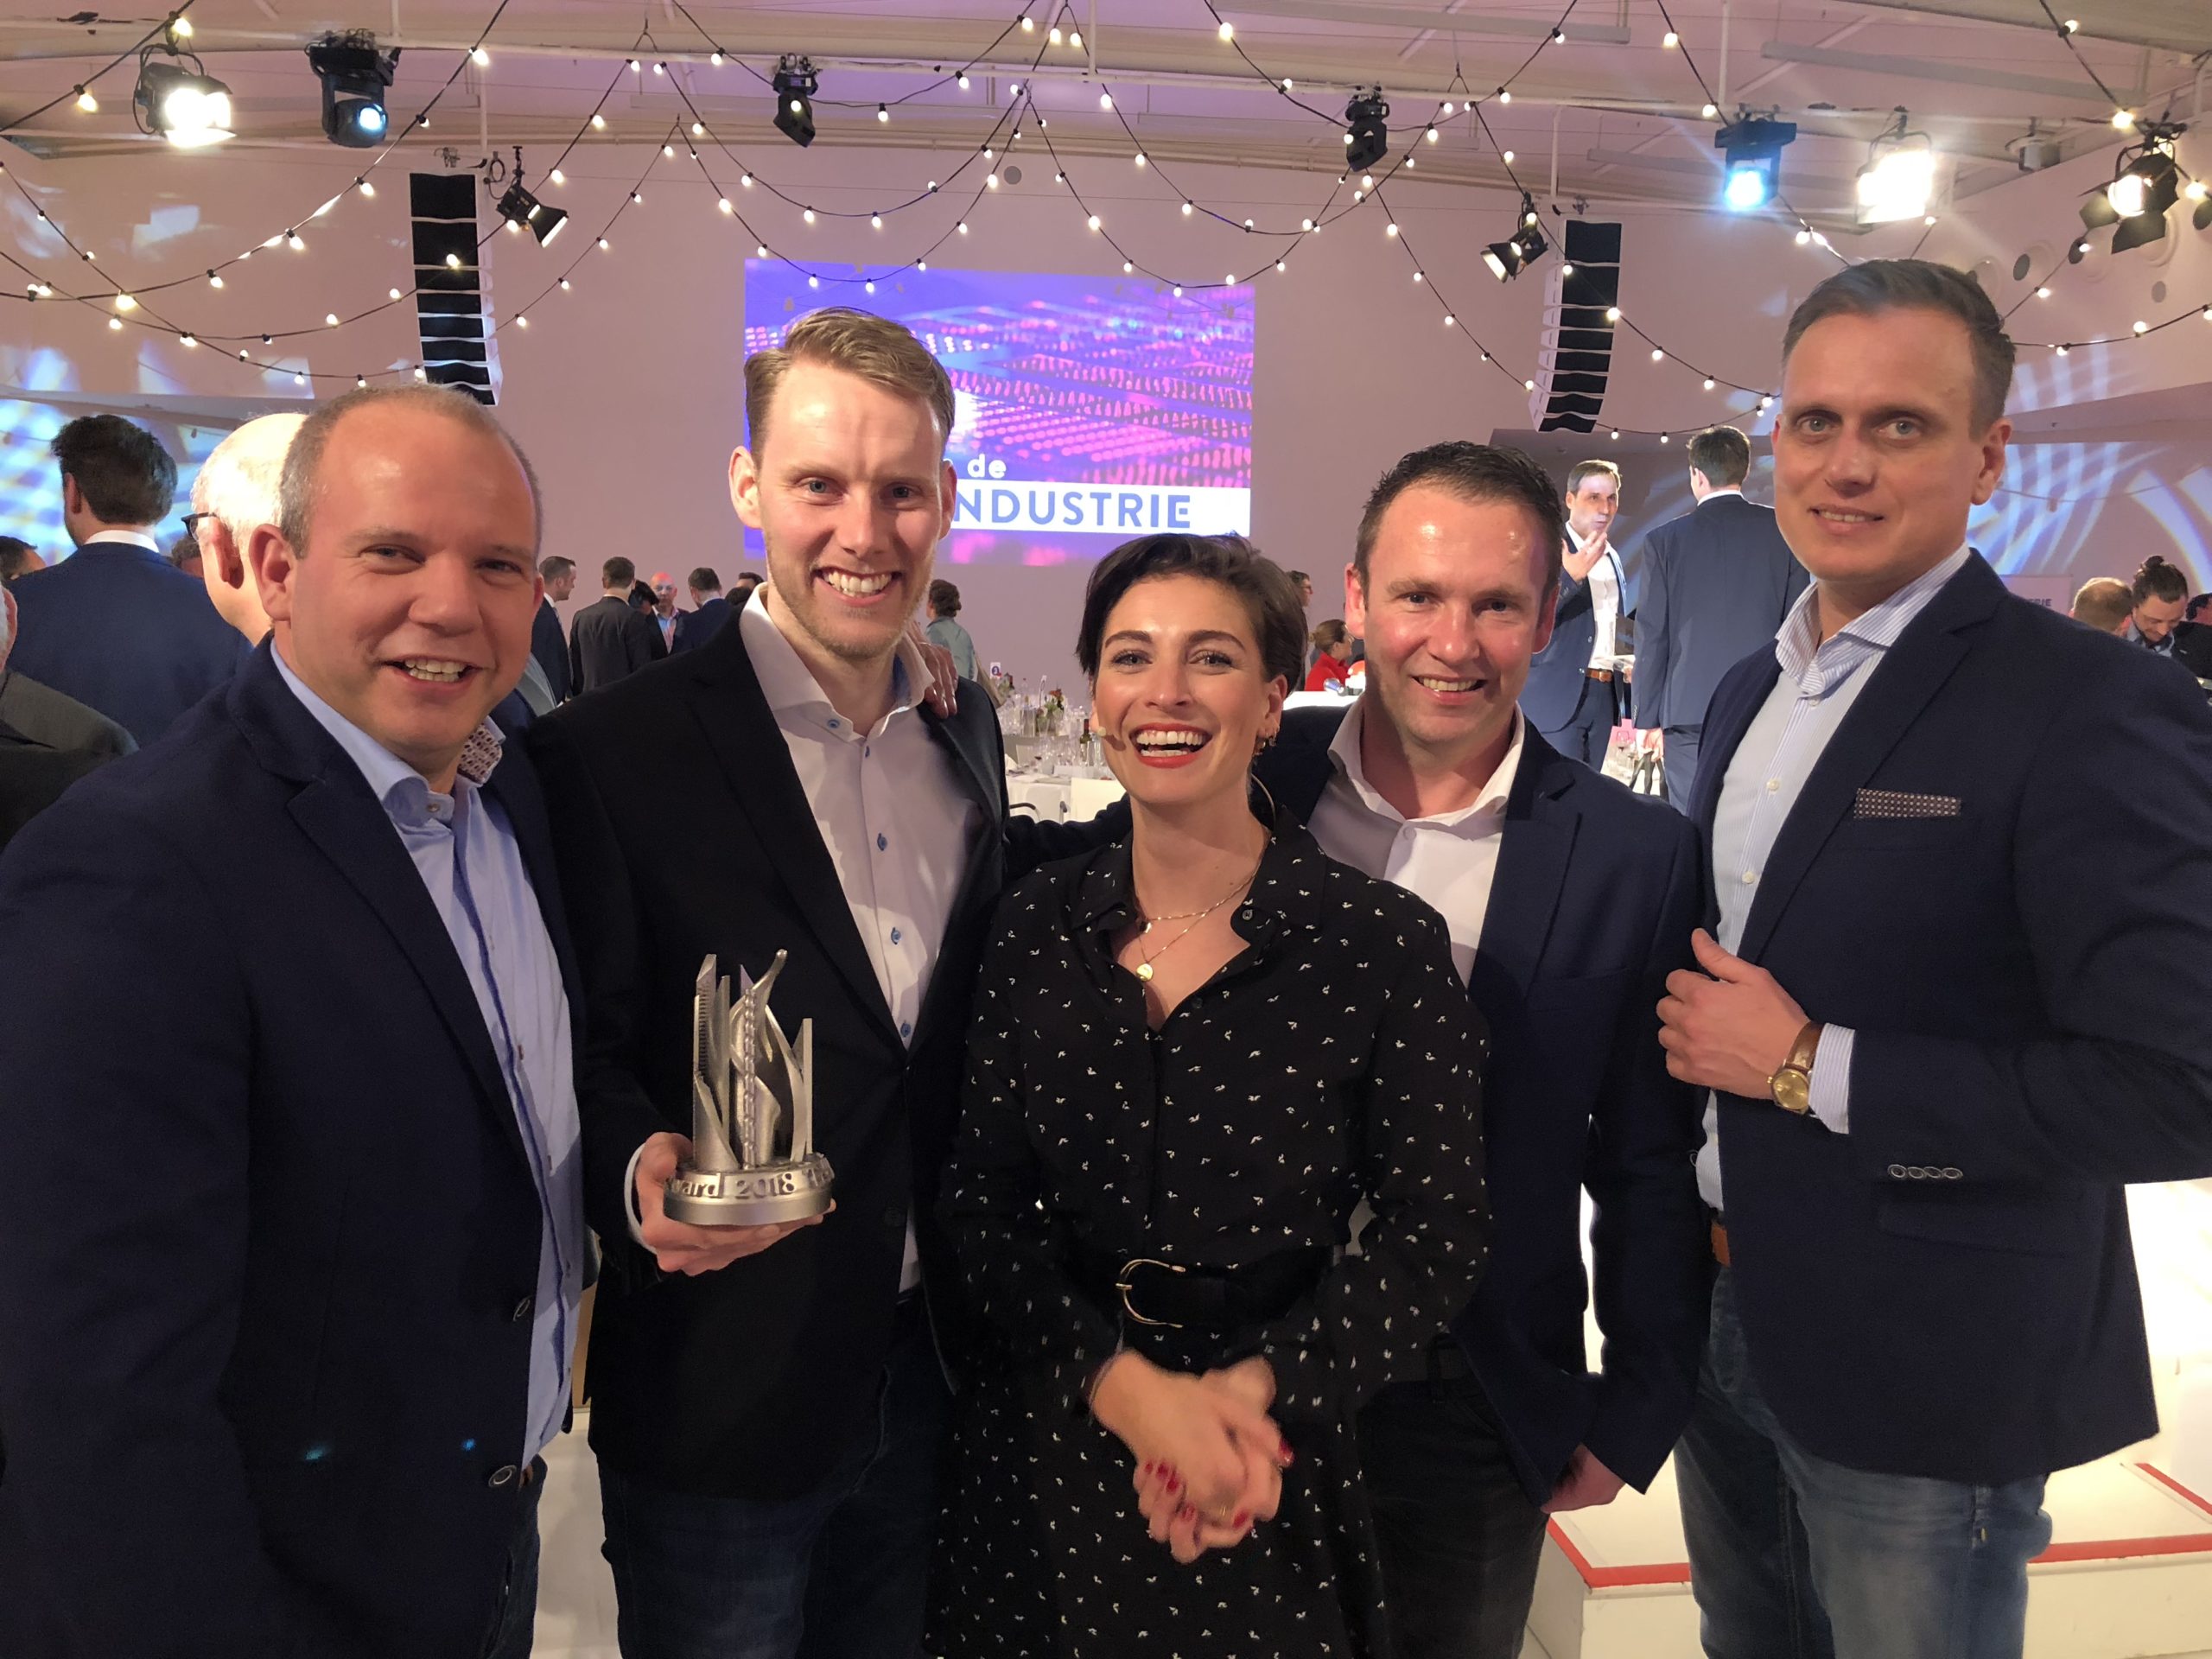 innovatie award uitreiking 2018